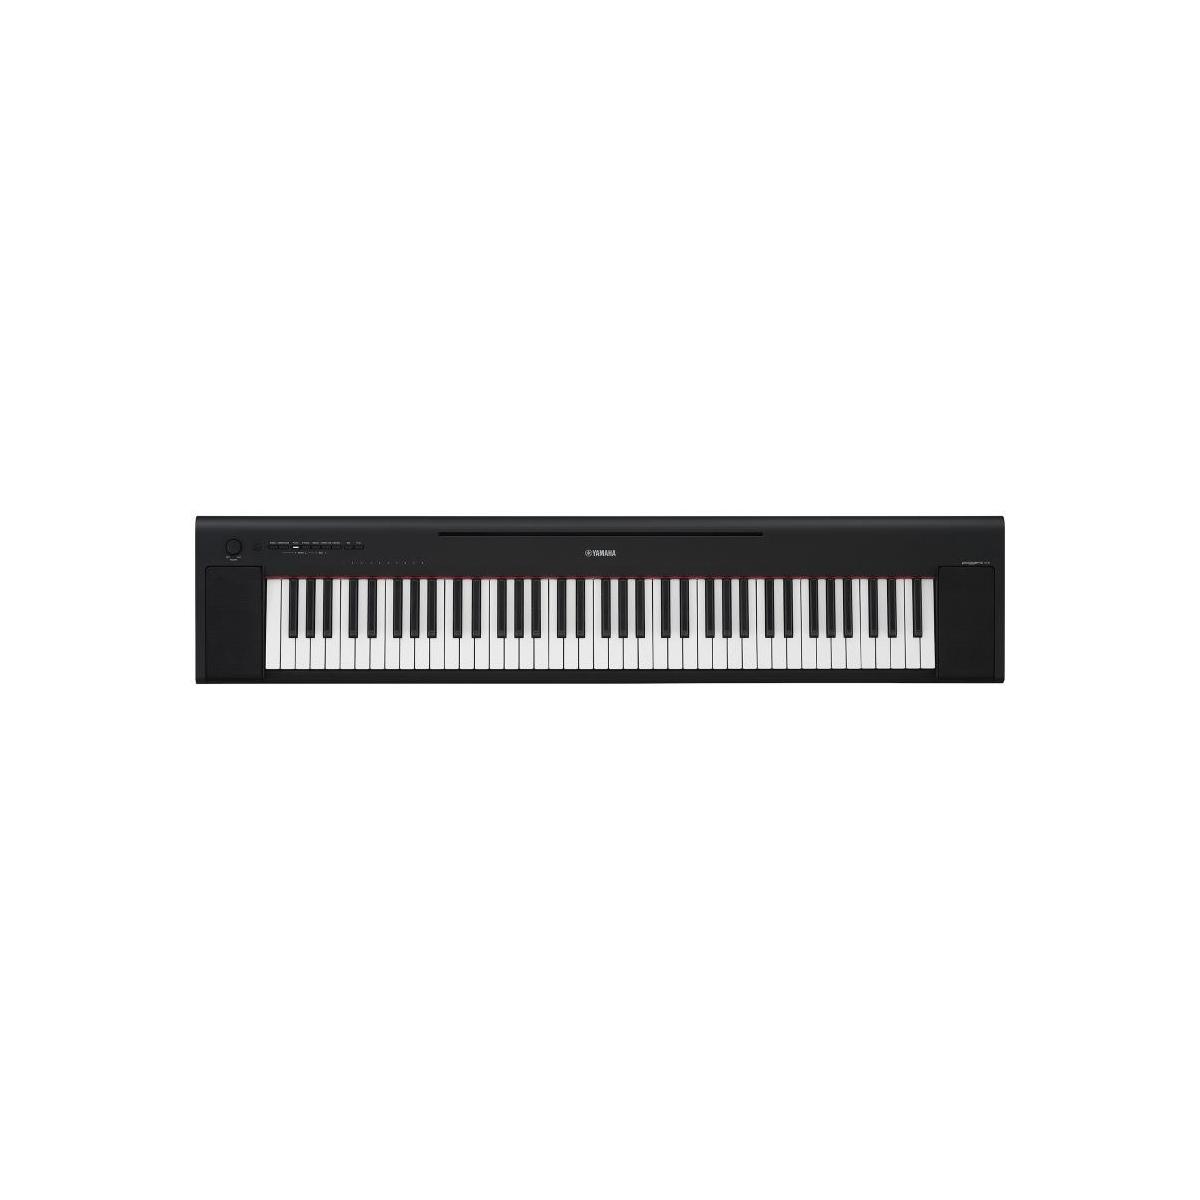 Yamaha  np-35 piaggero pianoforte 76 tasti semipesati